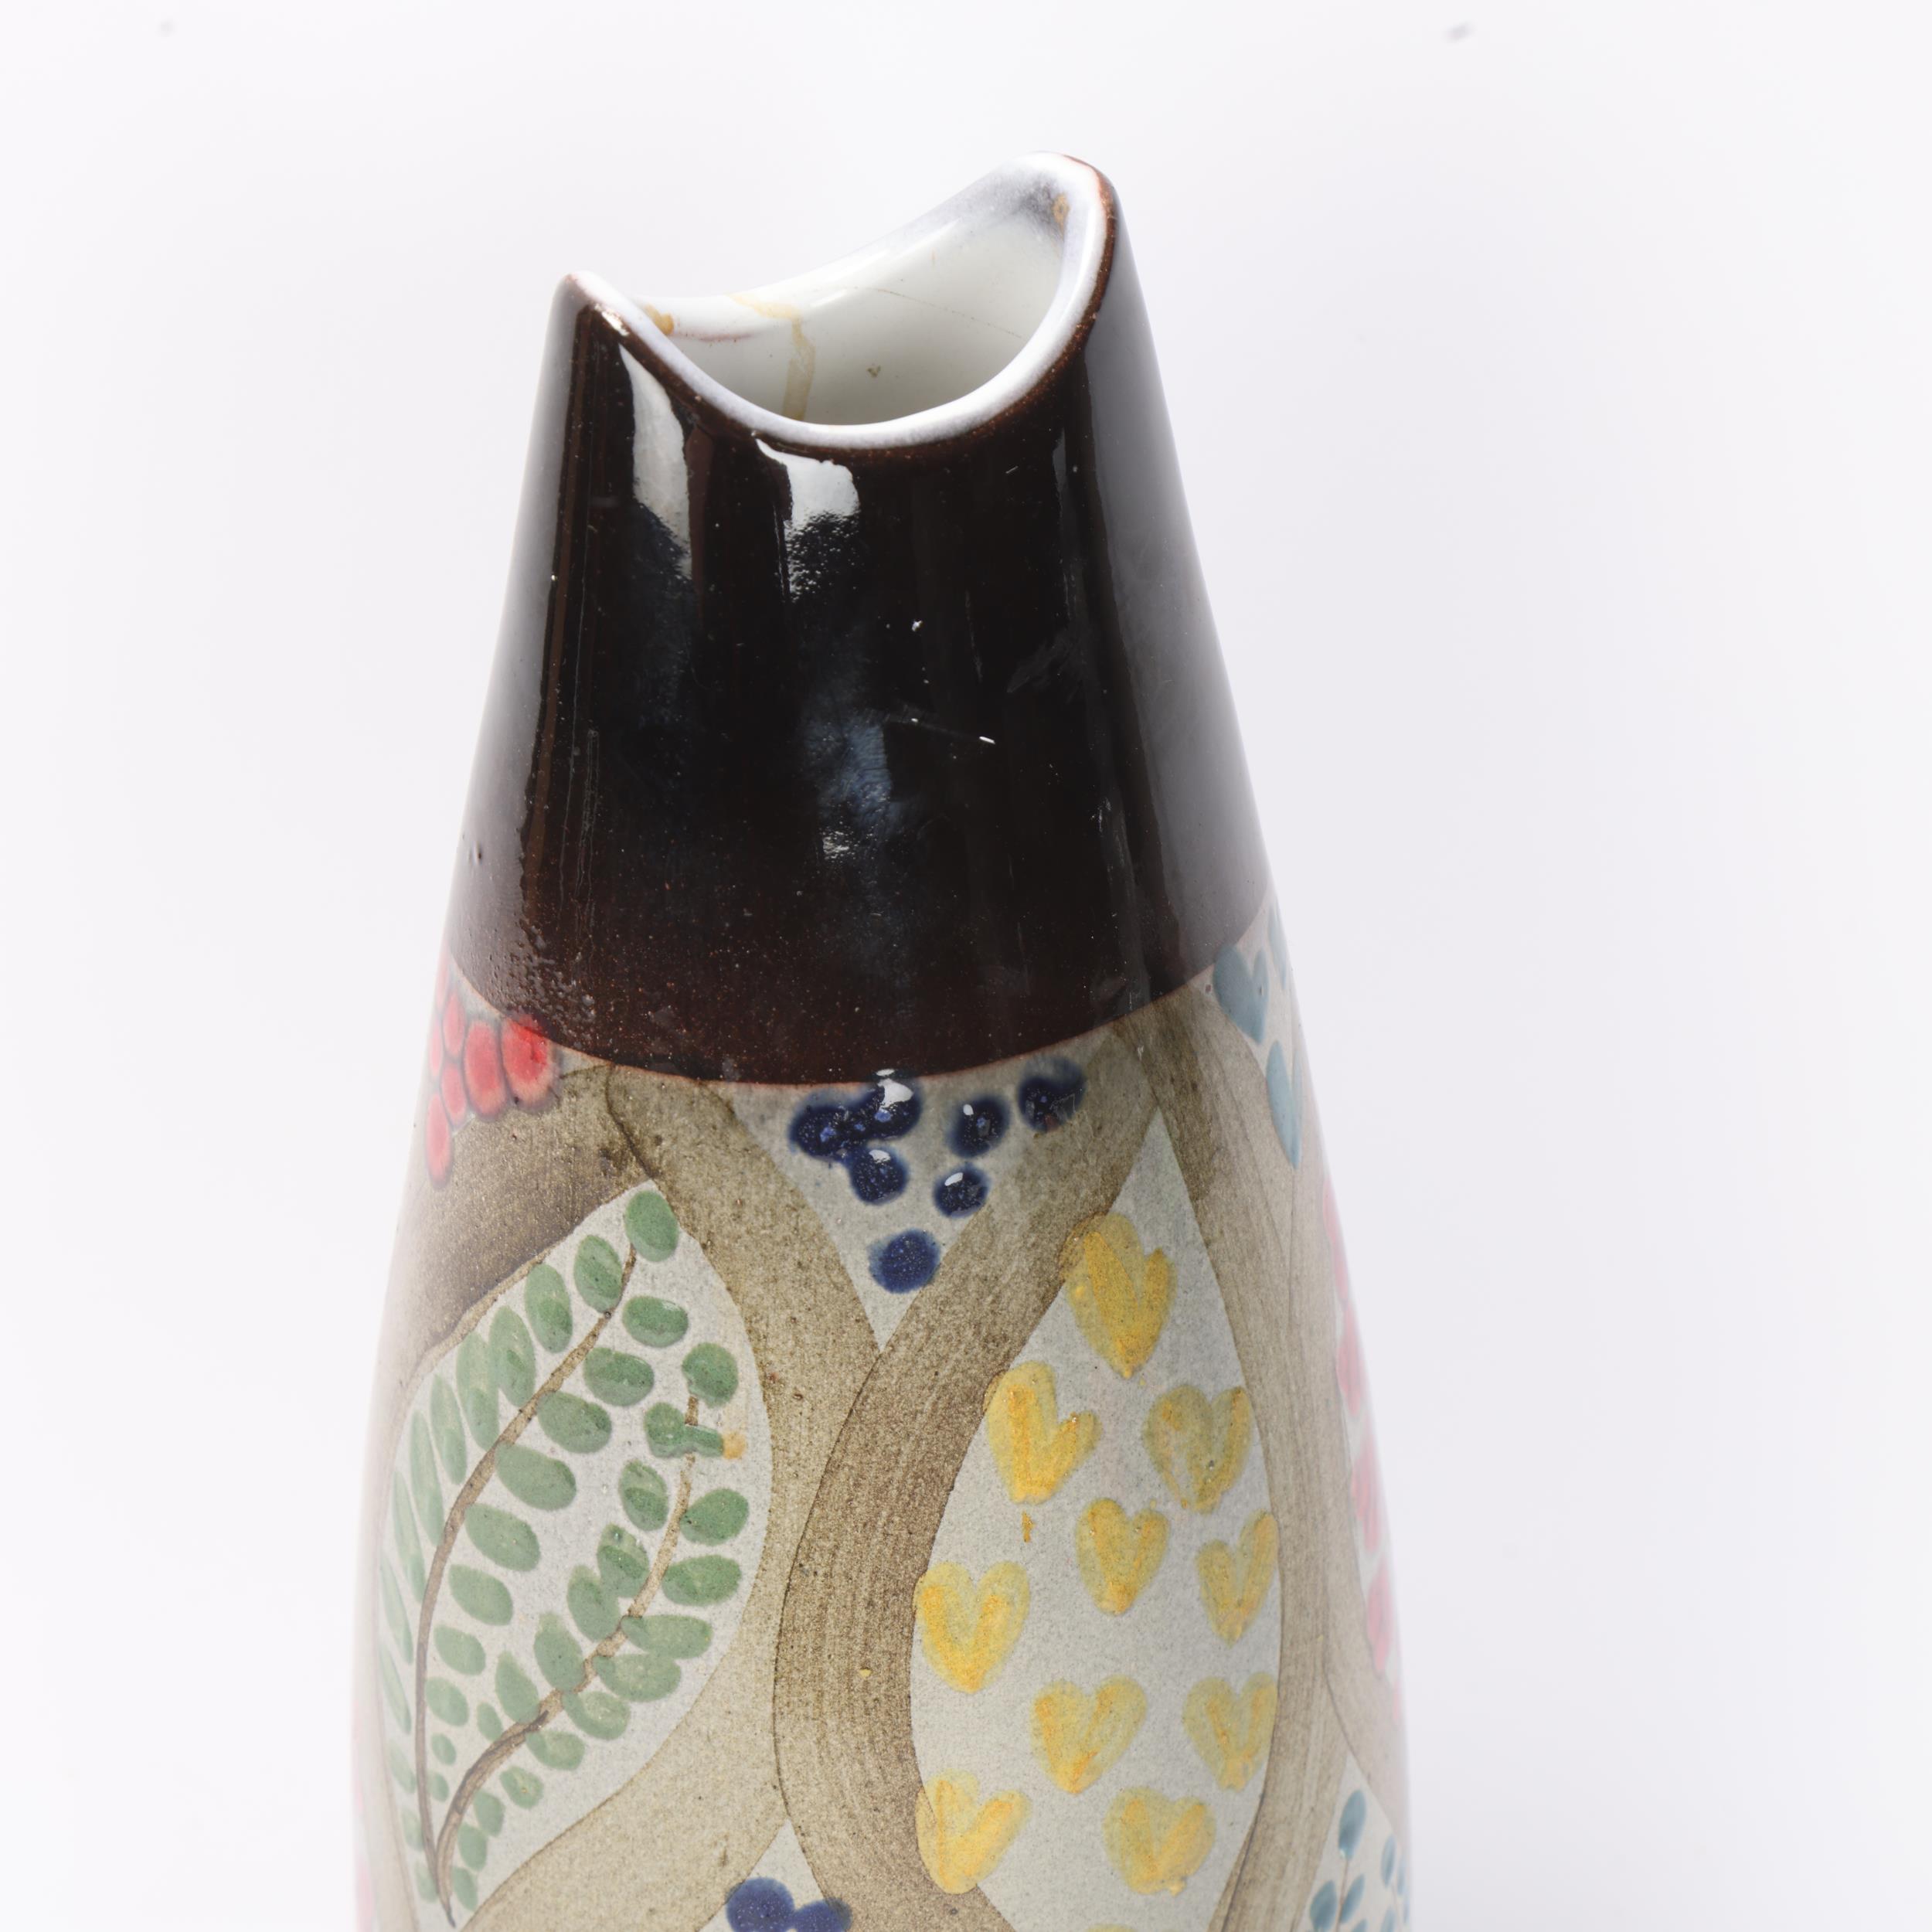 INGRID ATTERBERG for Uppsala Ekeby, a “Mimosa” vase in glazed earthenware, designed 1952, signed - Image 2 of 3